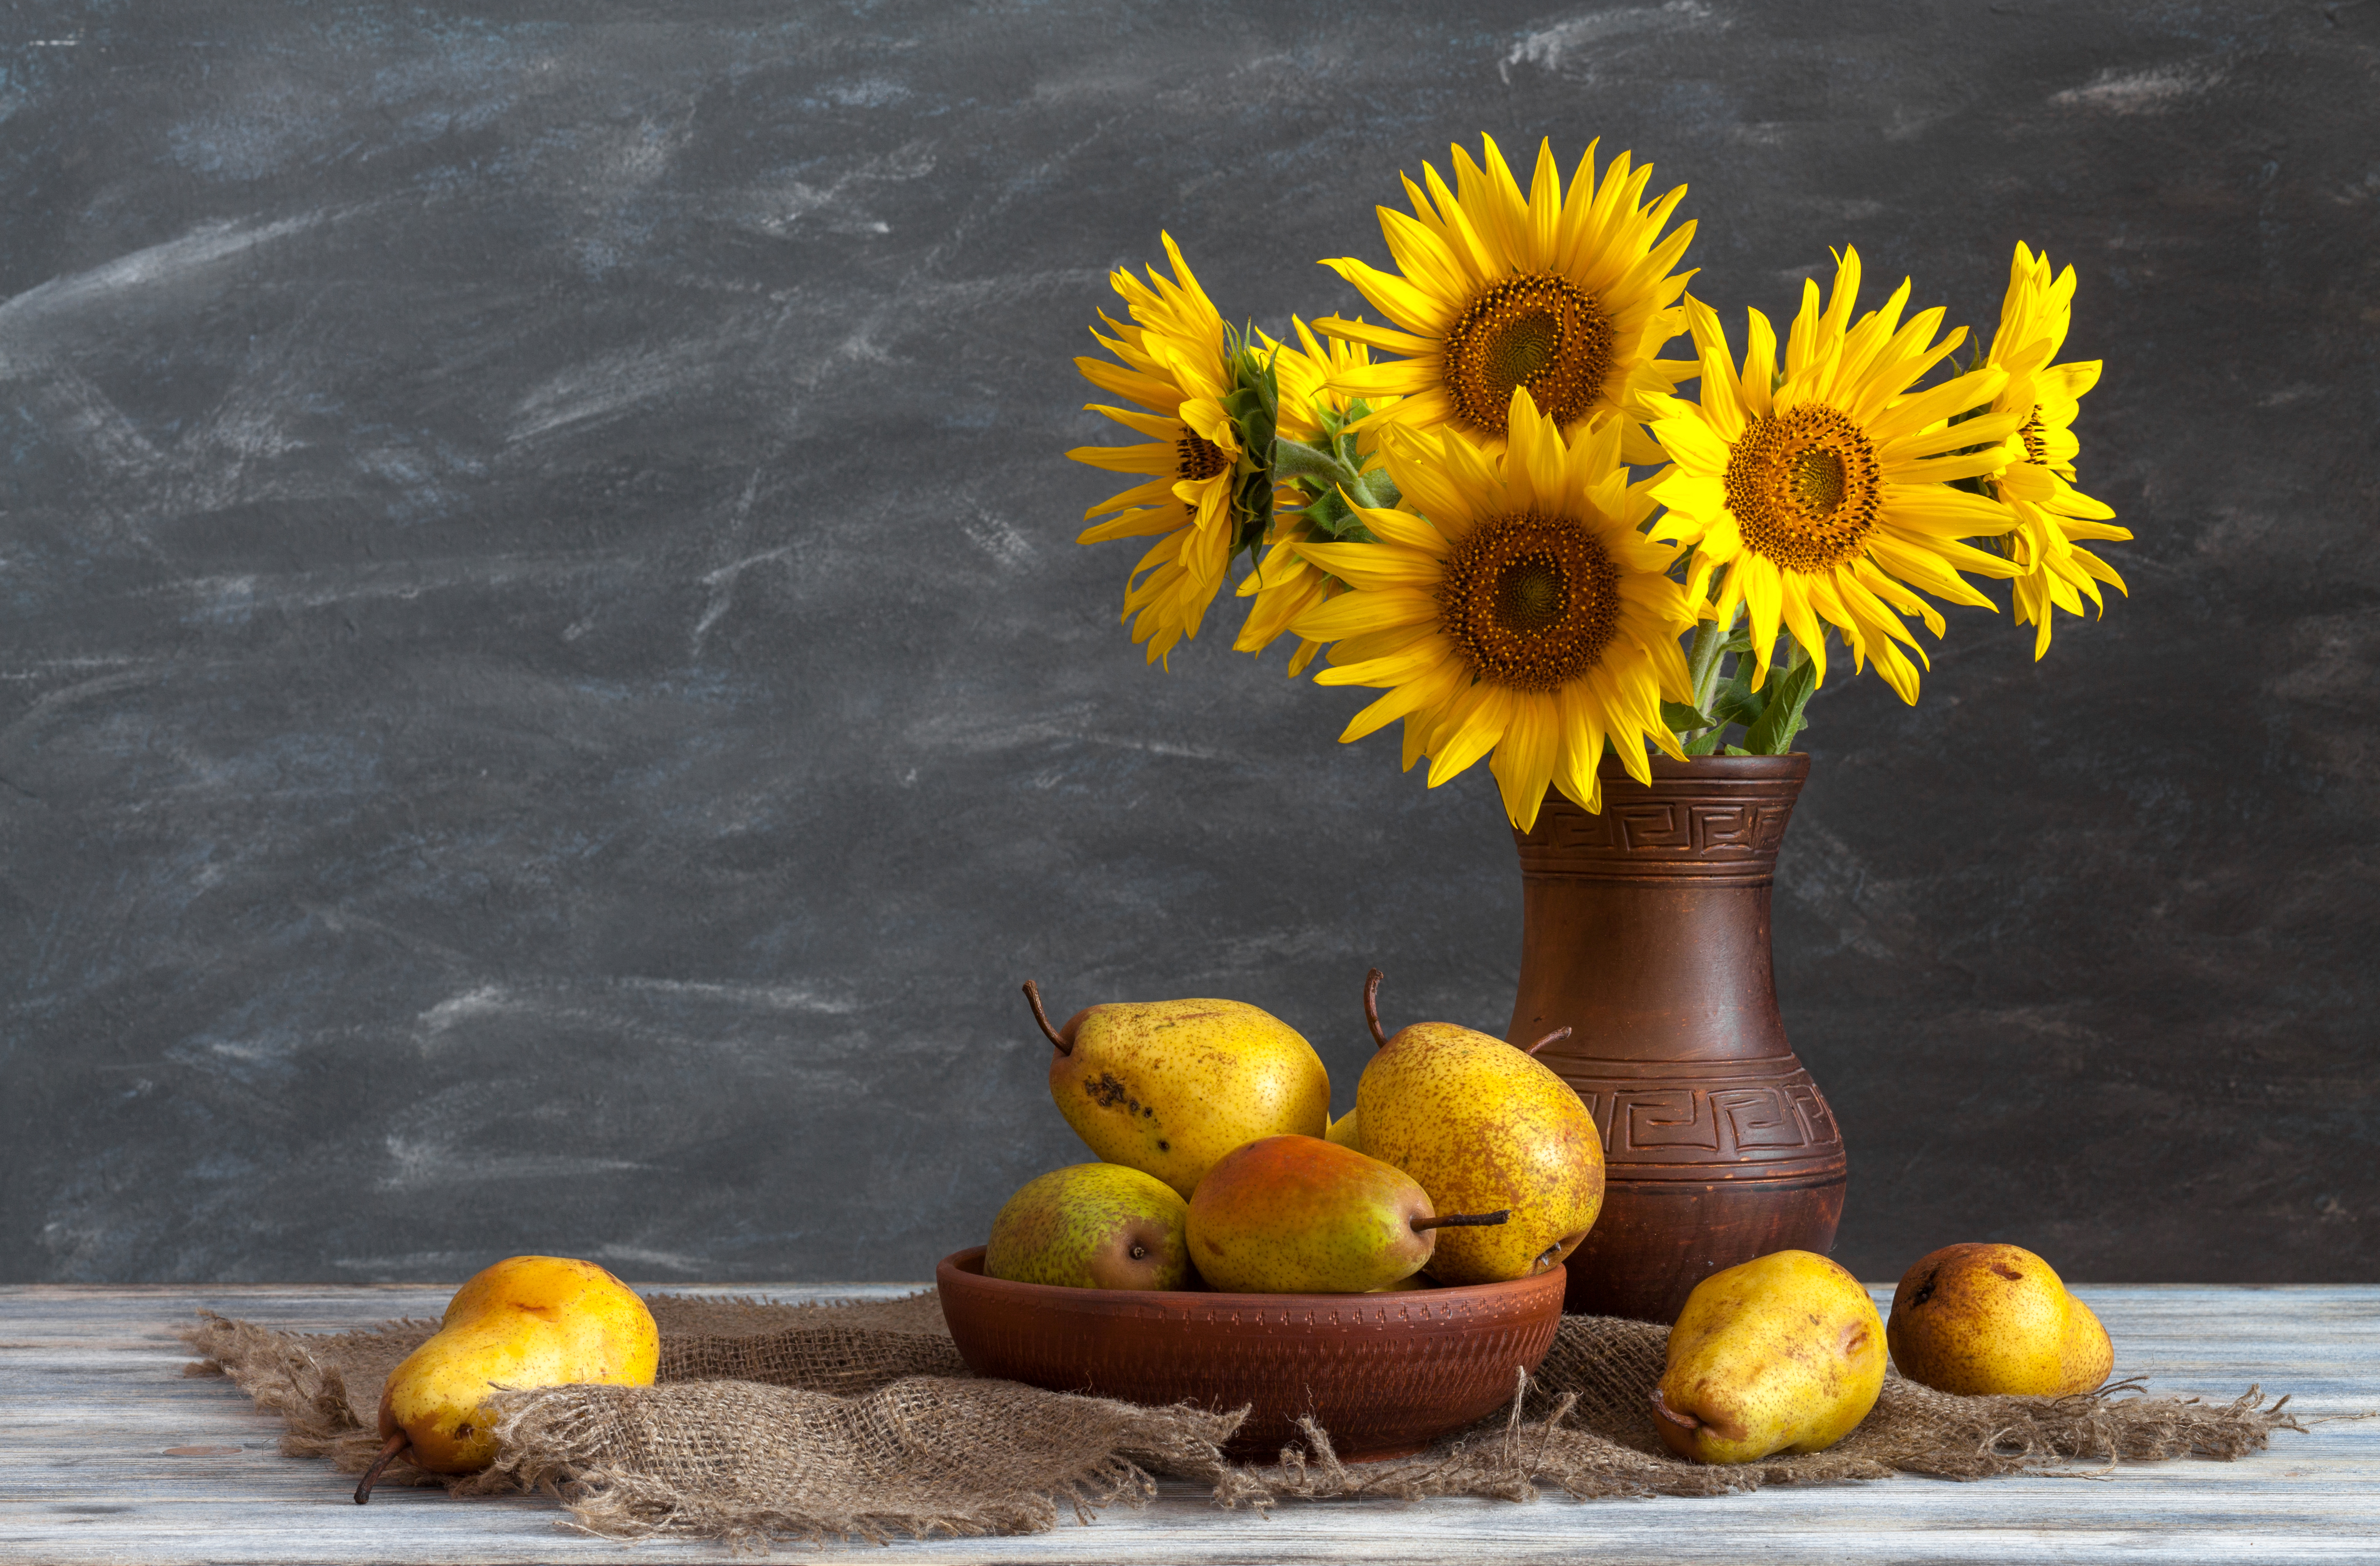 photography, still life, bowl, pear, sunflower, vase, yellow flower